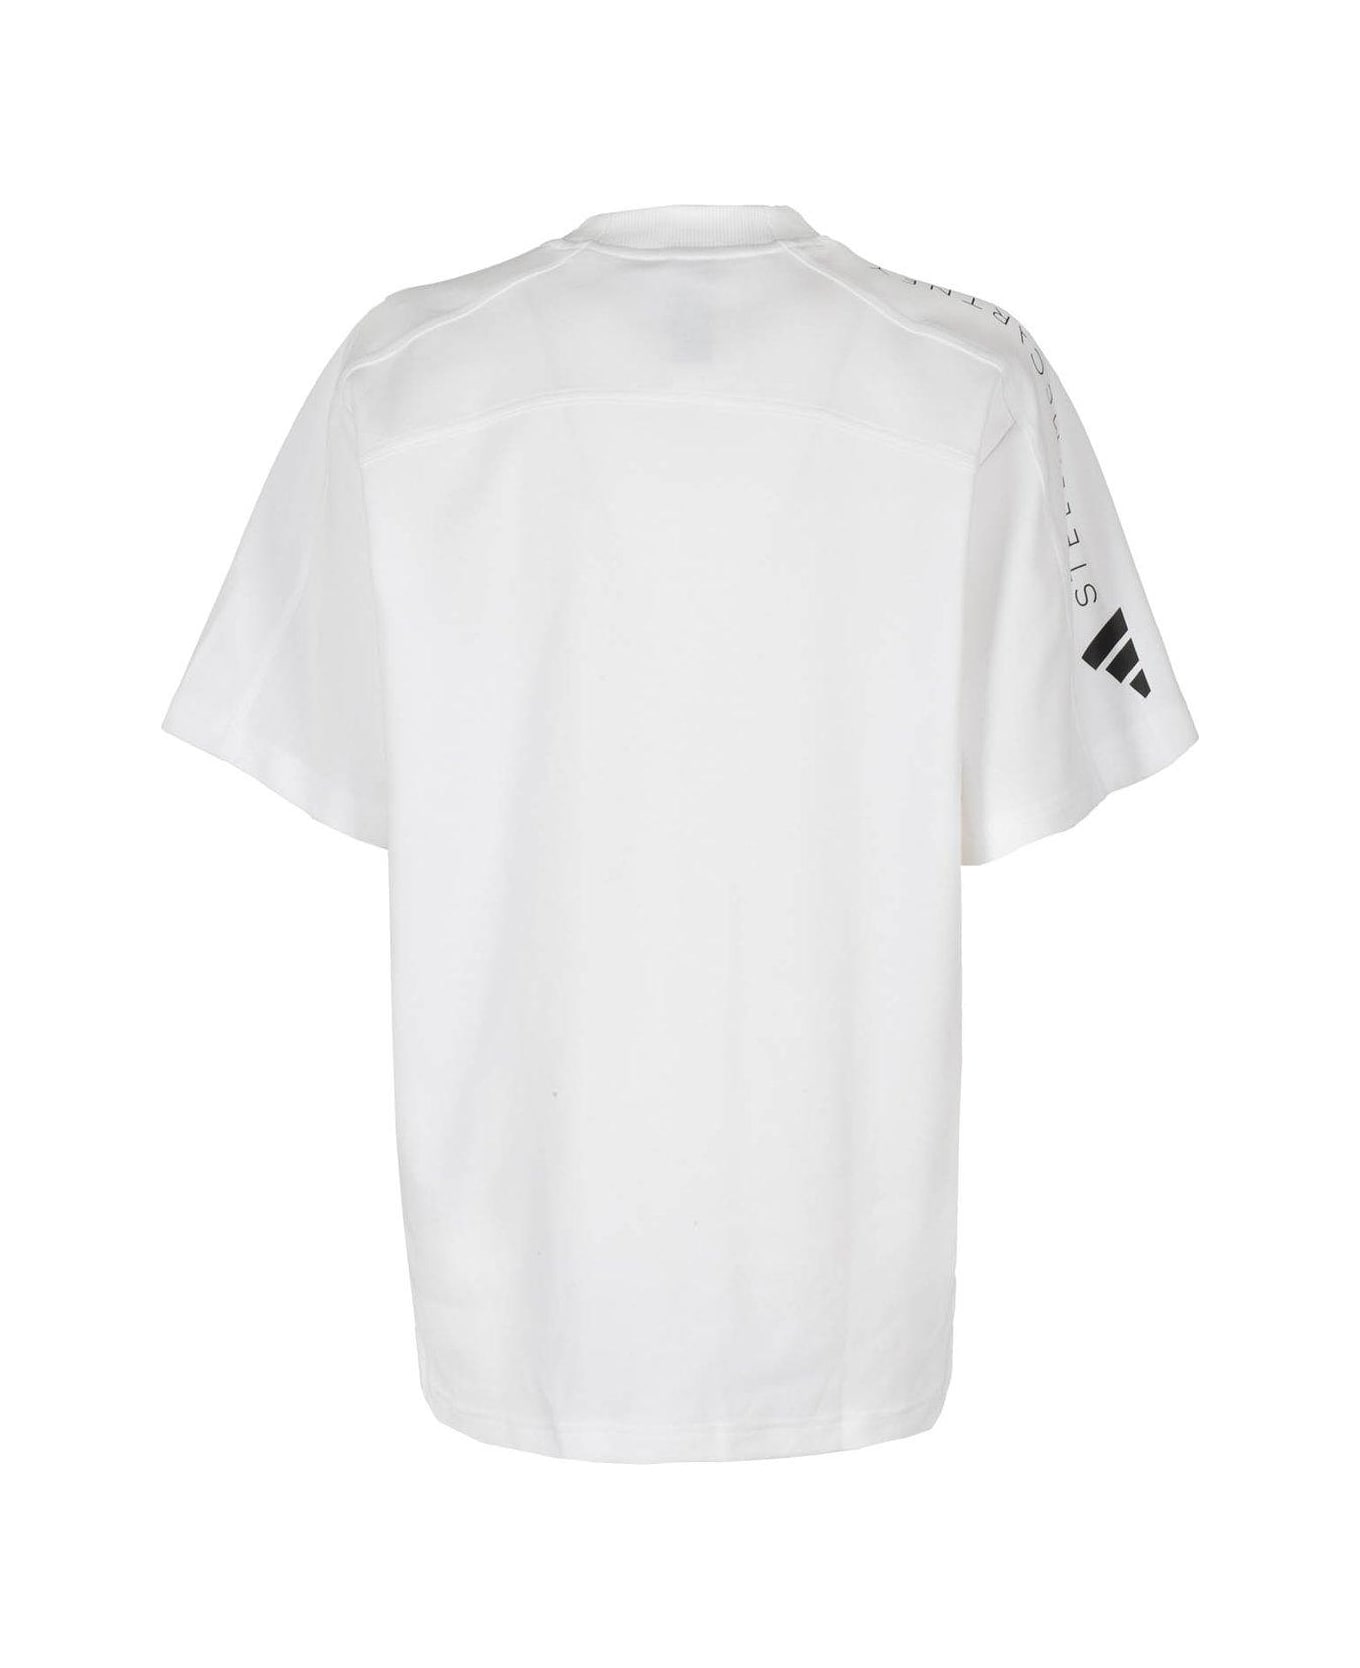 Adidas by Stella McCartney Logo T-shirt - WHITE Tシャツ